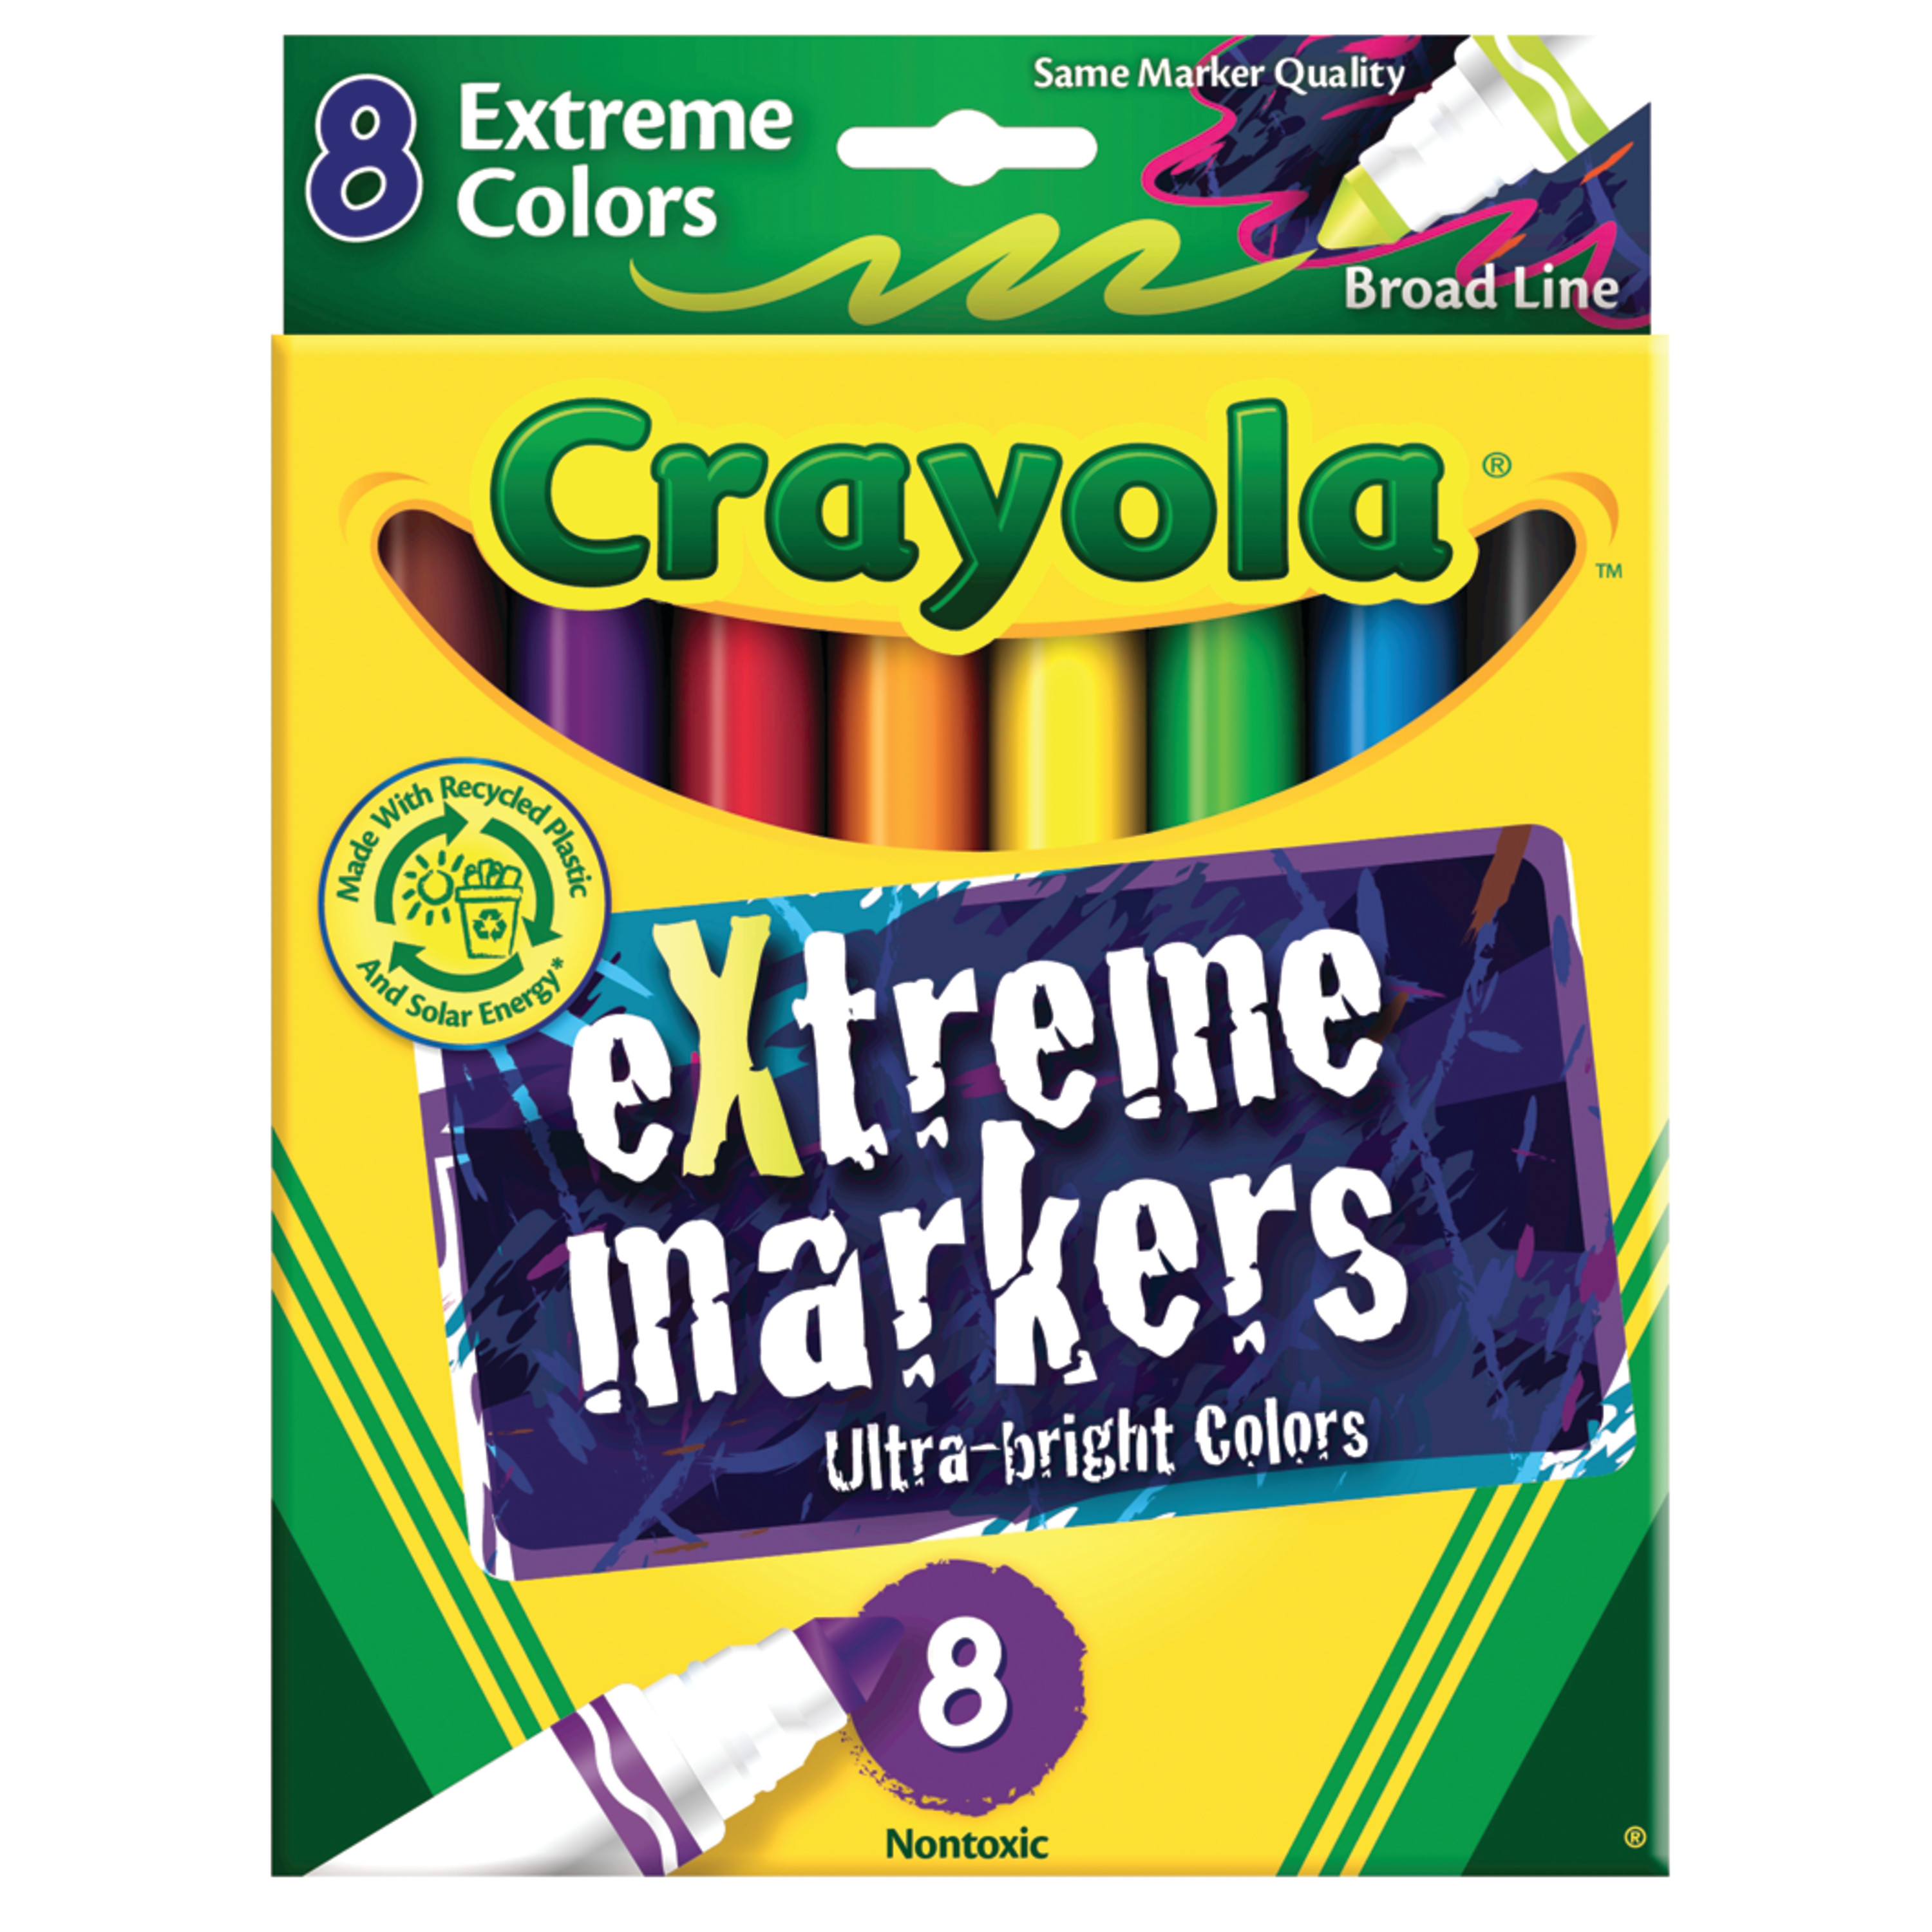 Crayola Extreme Marker Set, 8-Colors - image 1 of 2